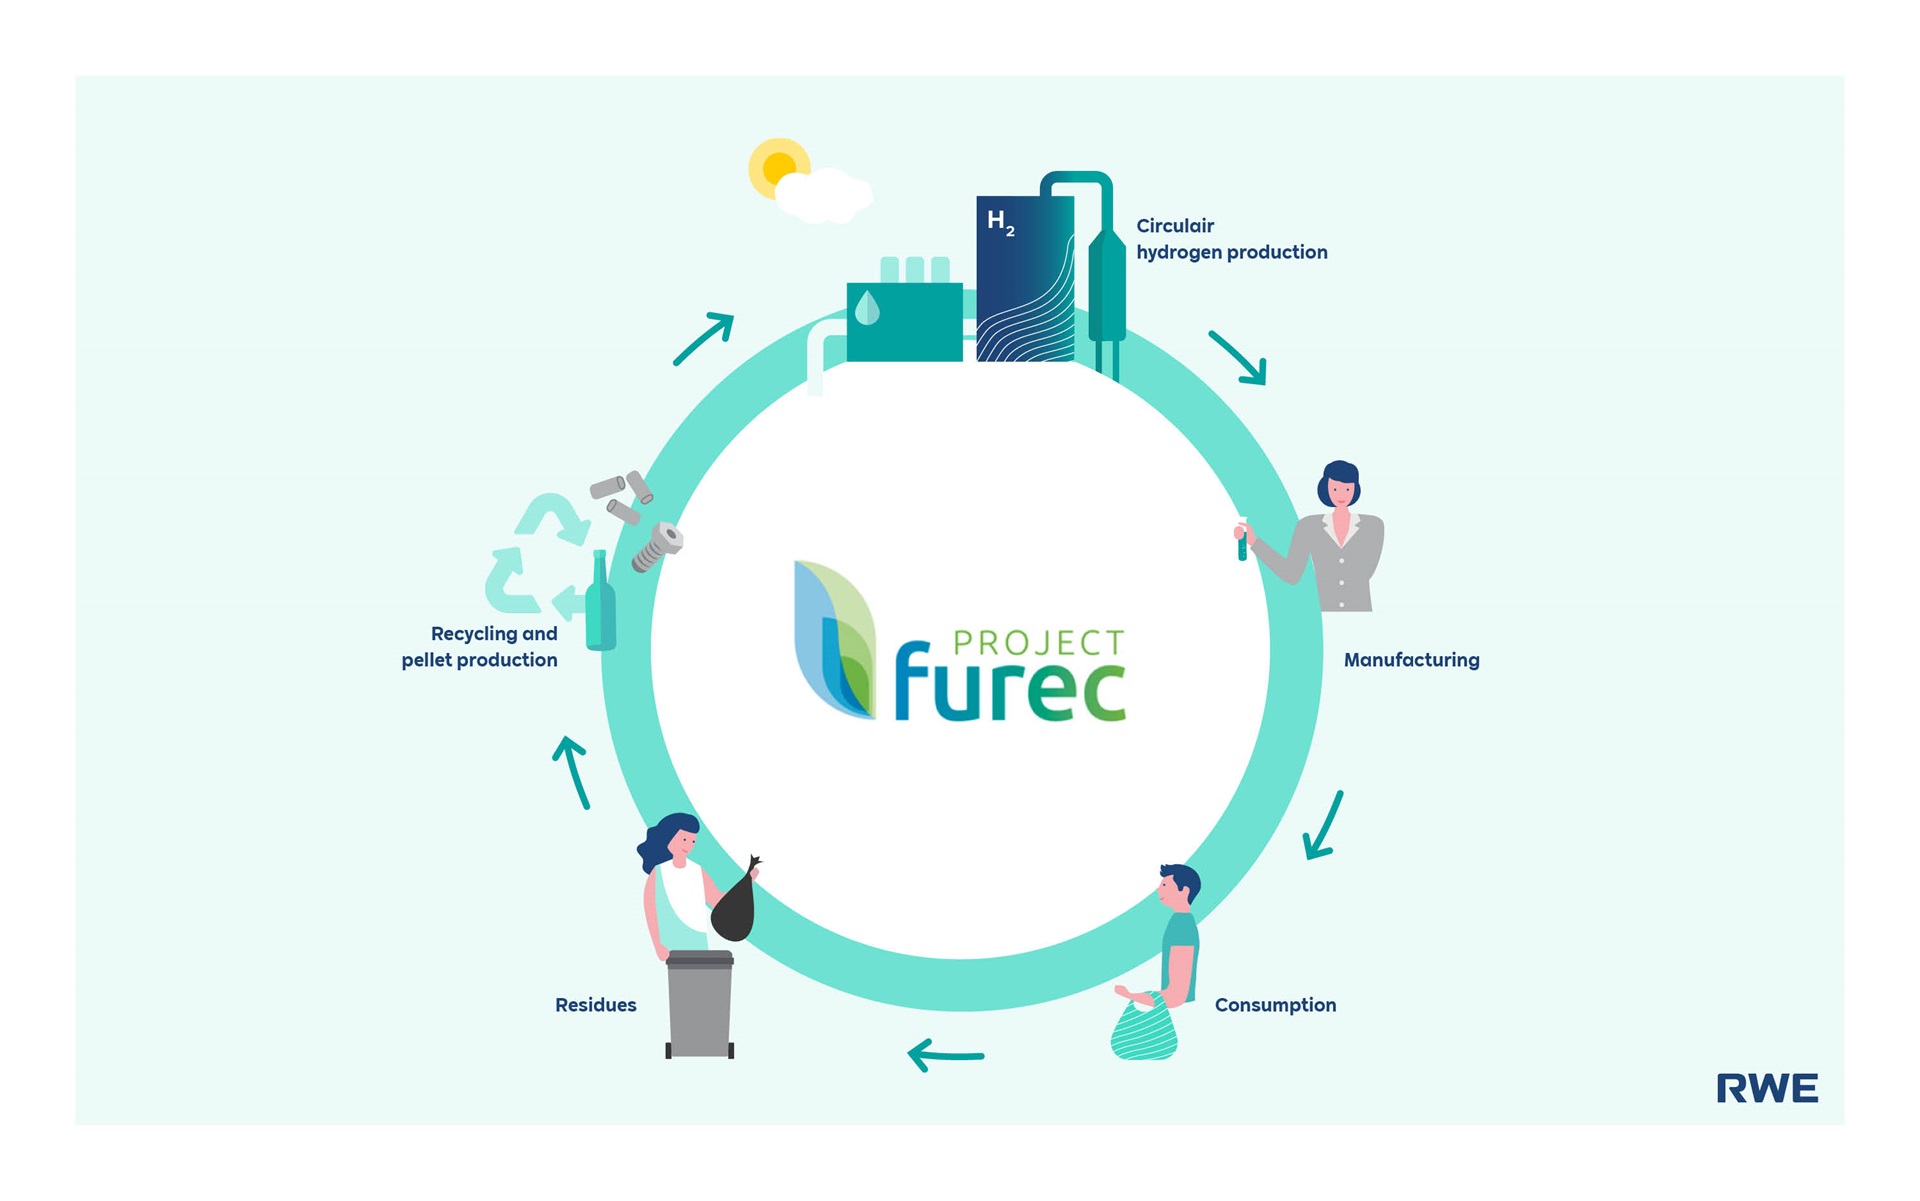 Project FUREC is geselecteerd voor subsidie vanuit het EU Innovation Fund